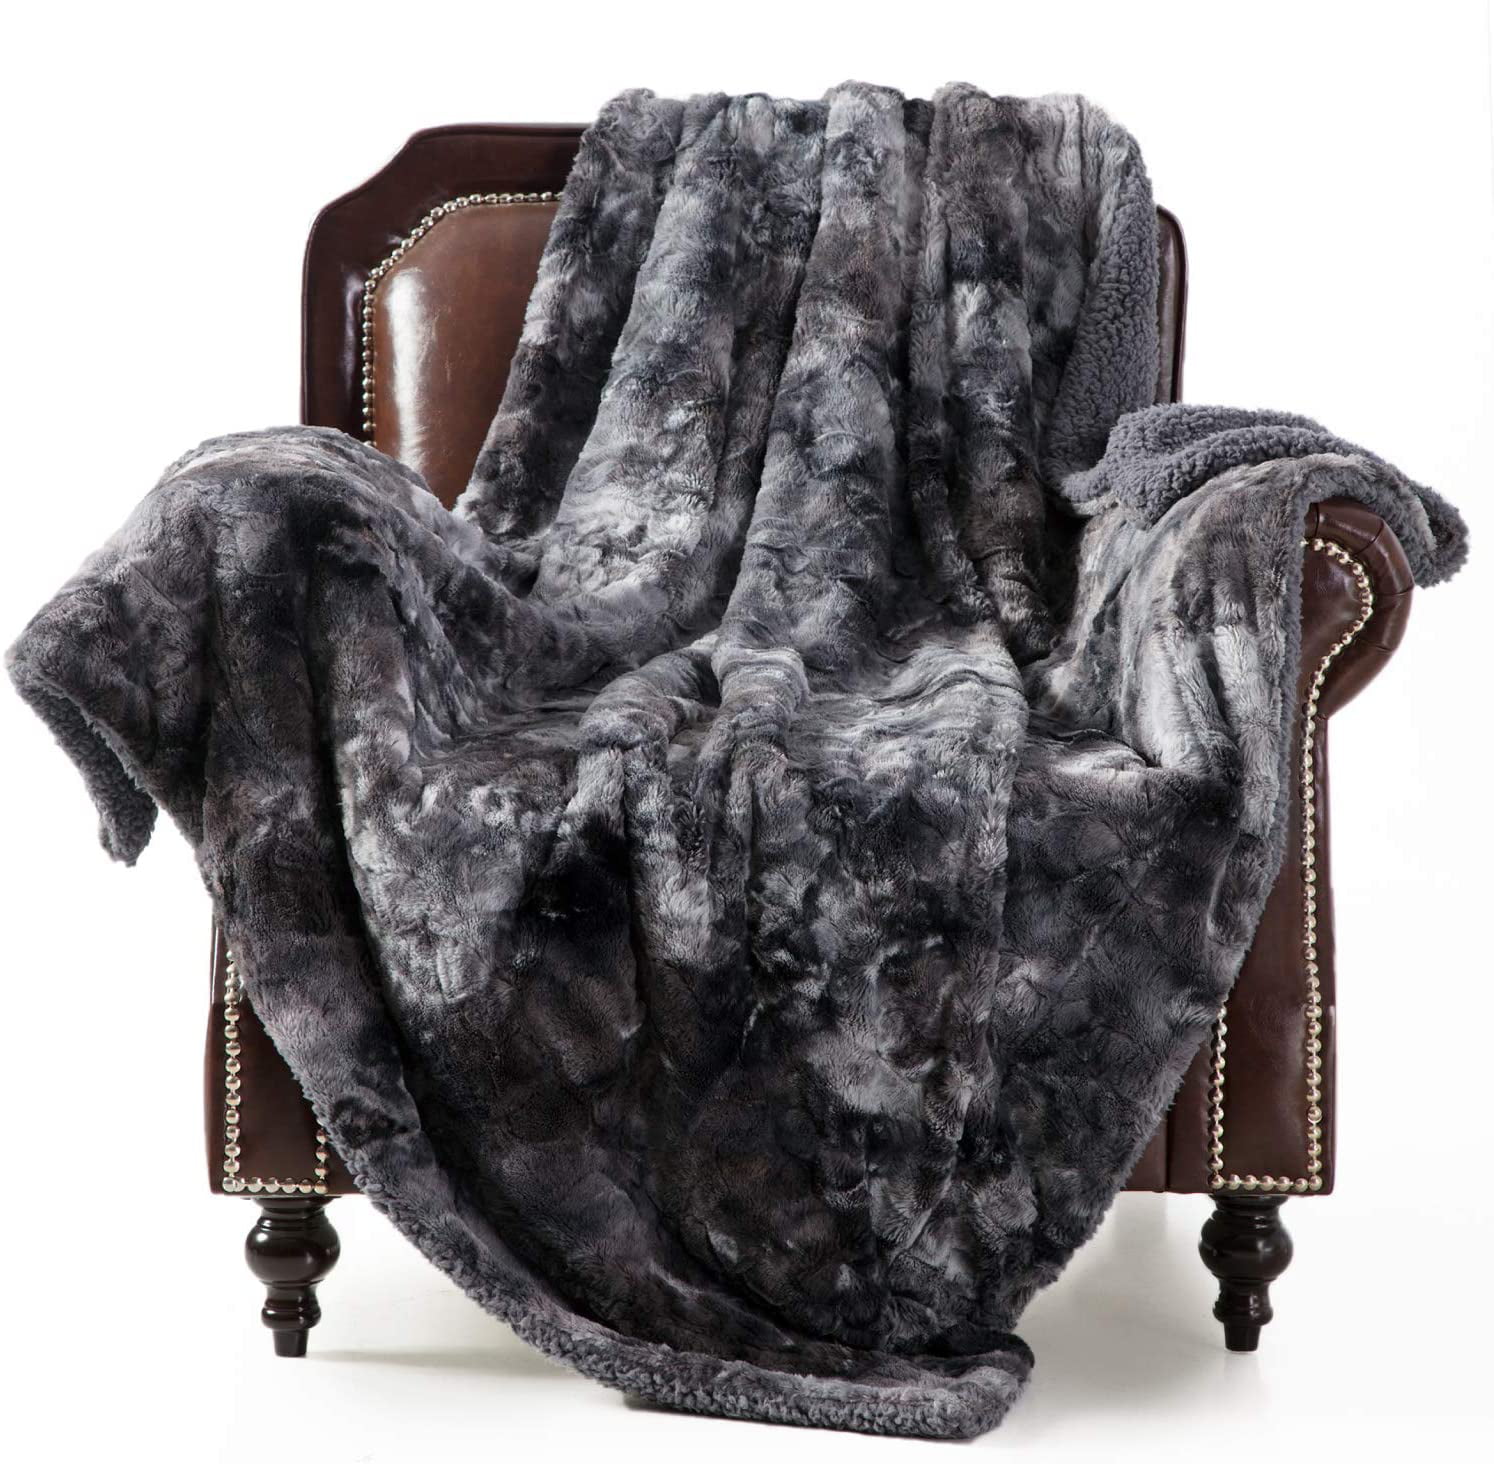 Reversible Soft Fluffy Minky Fleece Throw Blanket softan Faux Fur Bed Blanket in Leopard Print Machine Washable 90×90 Beige